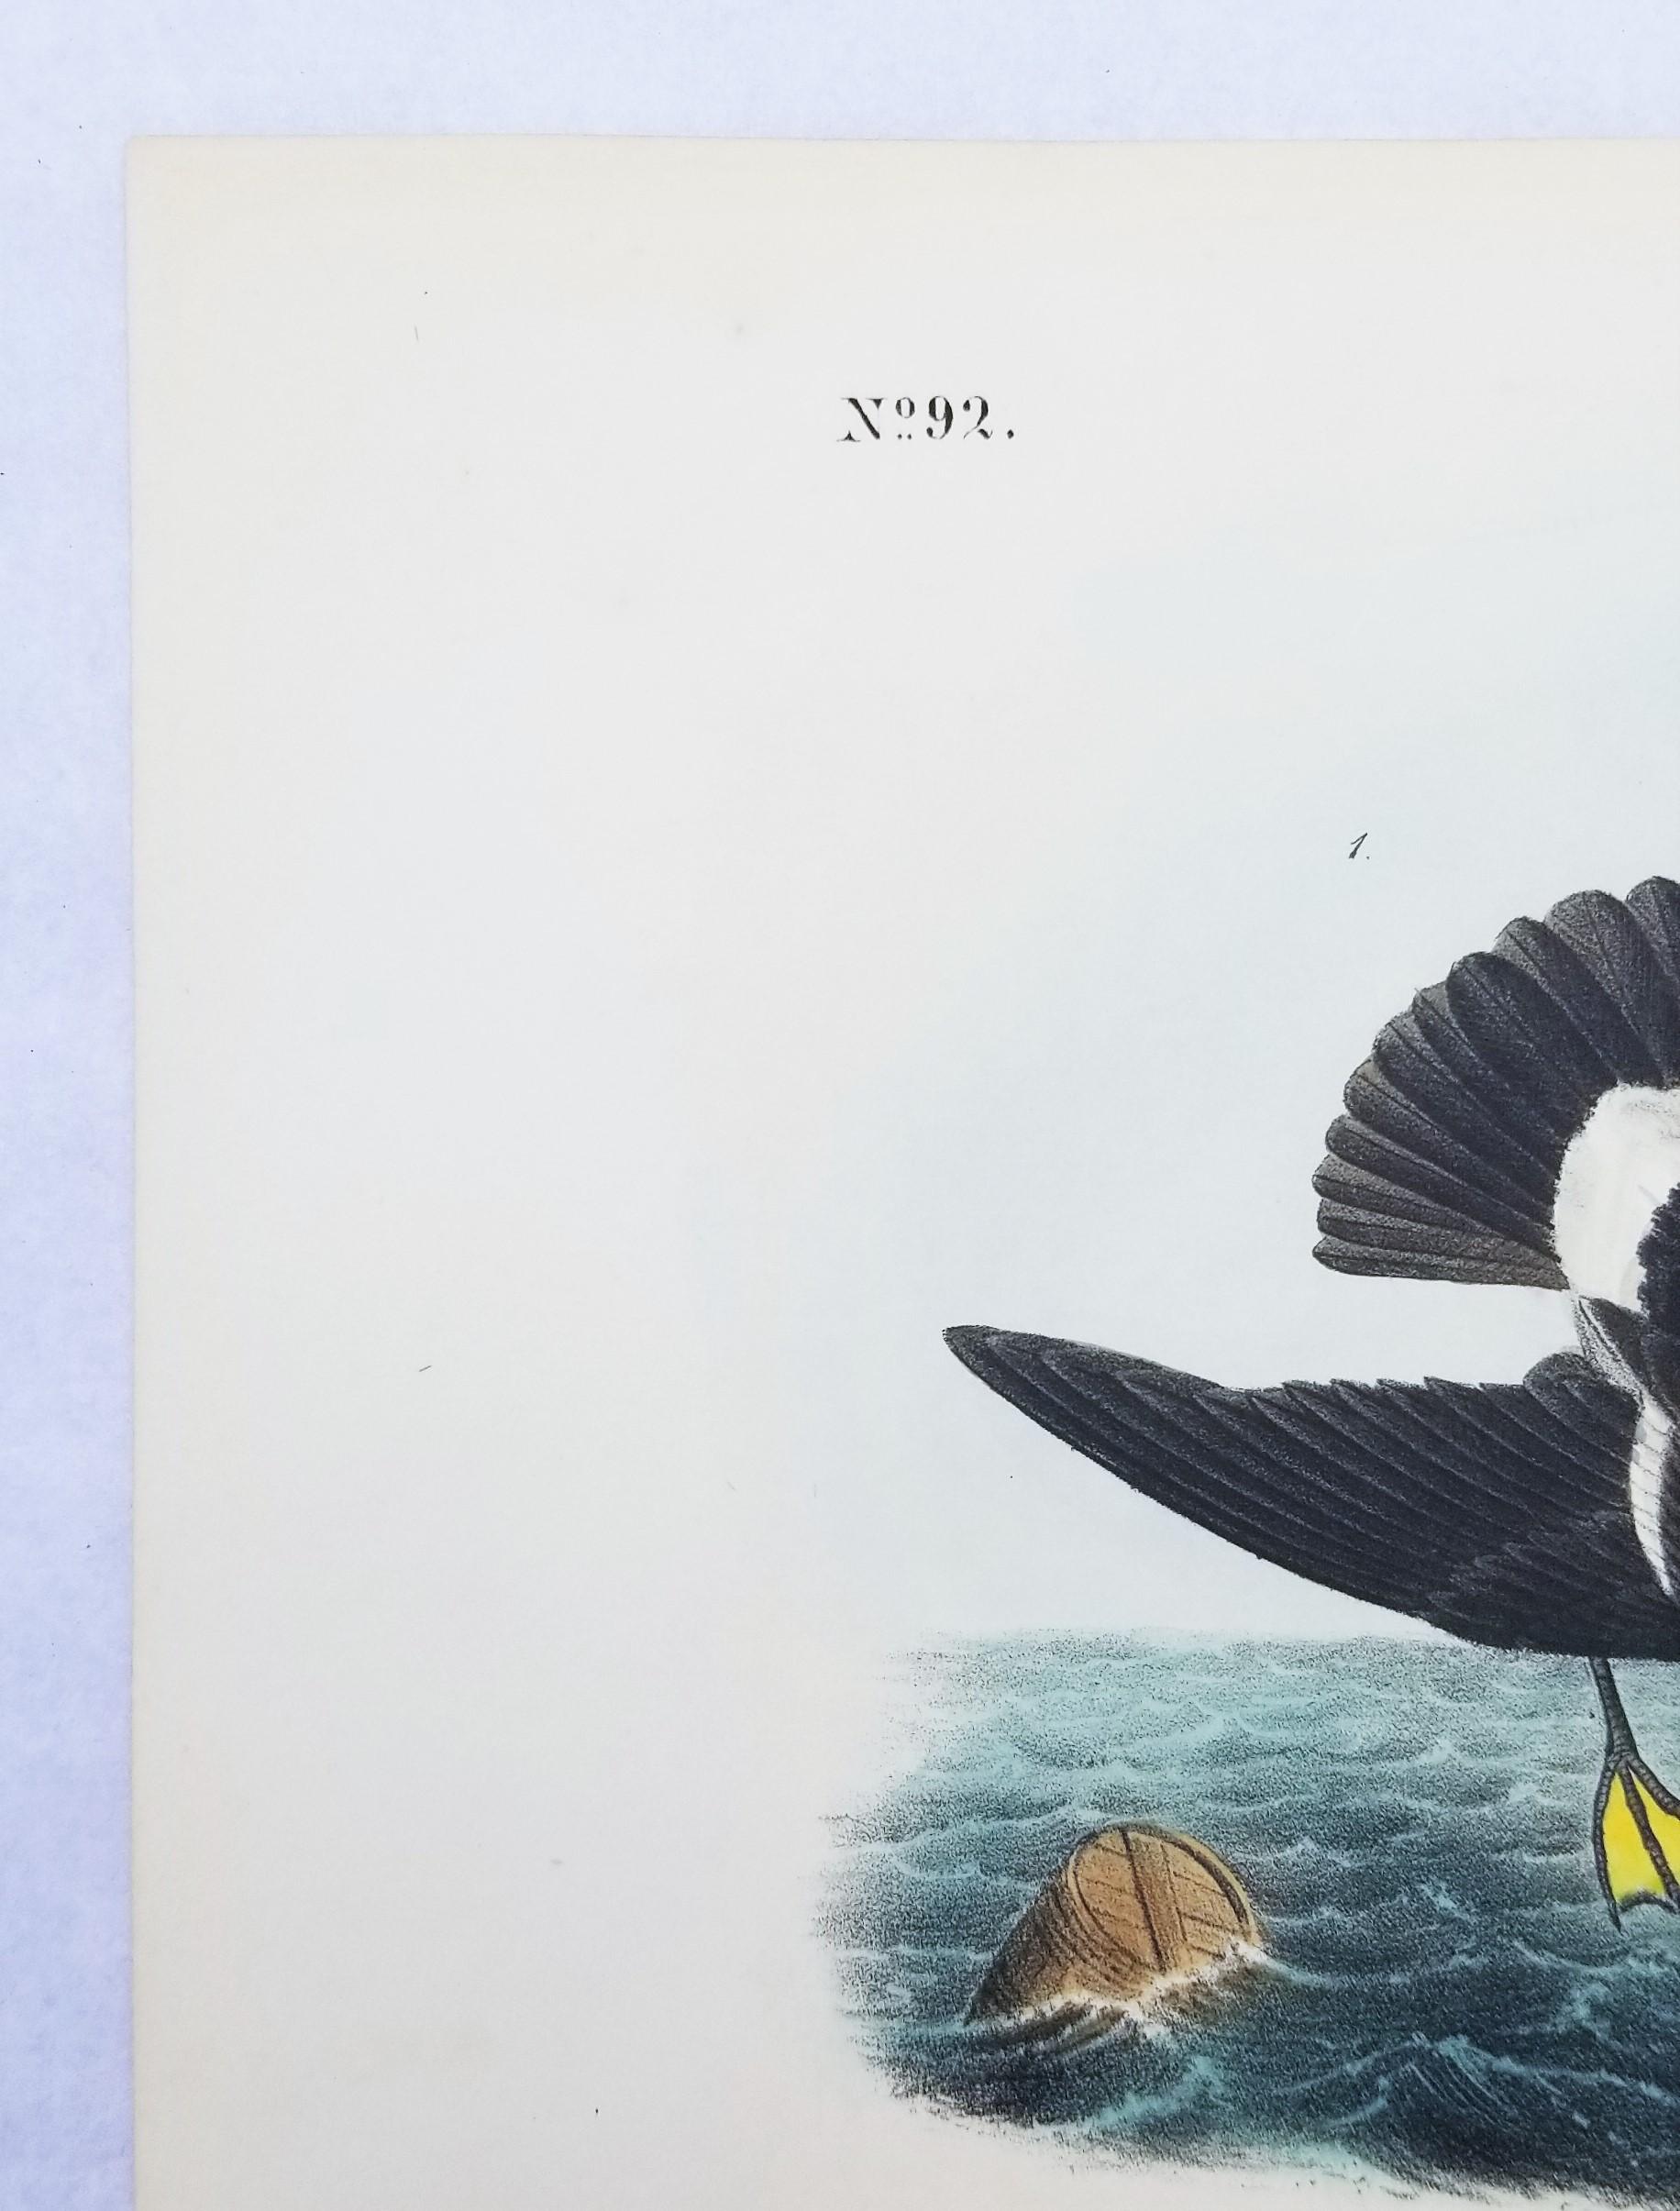 Künstler: John James Audubon (Amerikaner, 1785-1851)
Titel: 